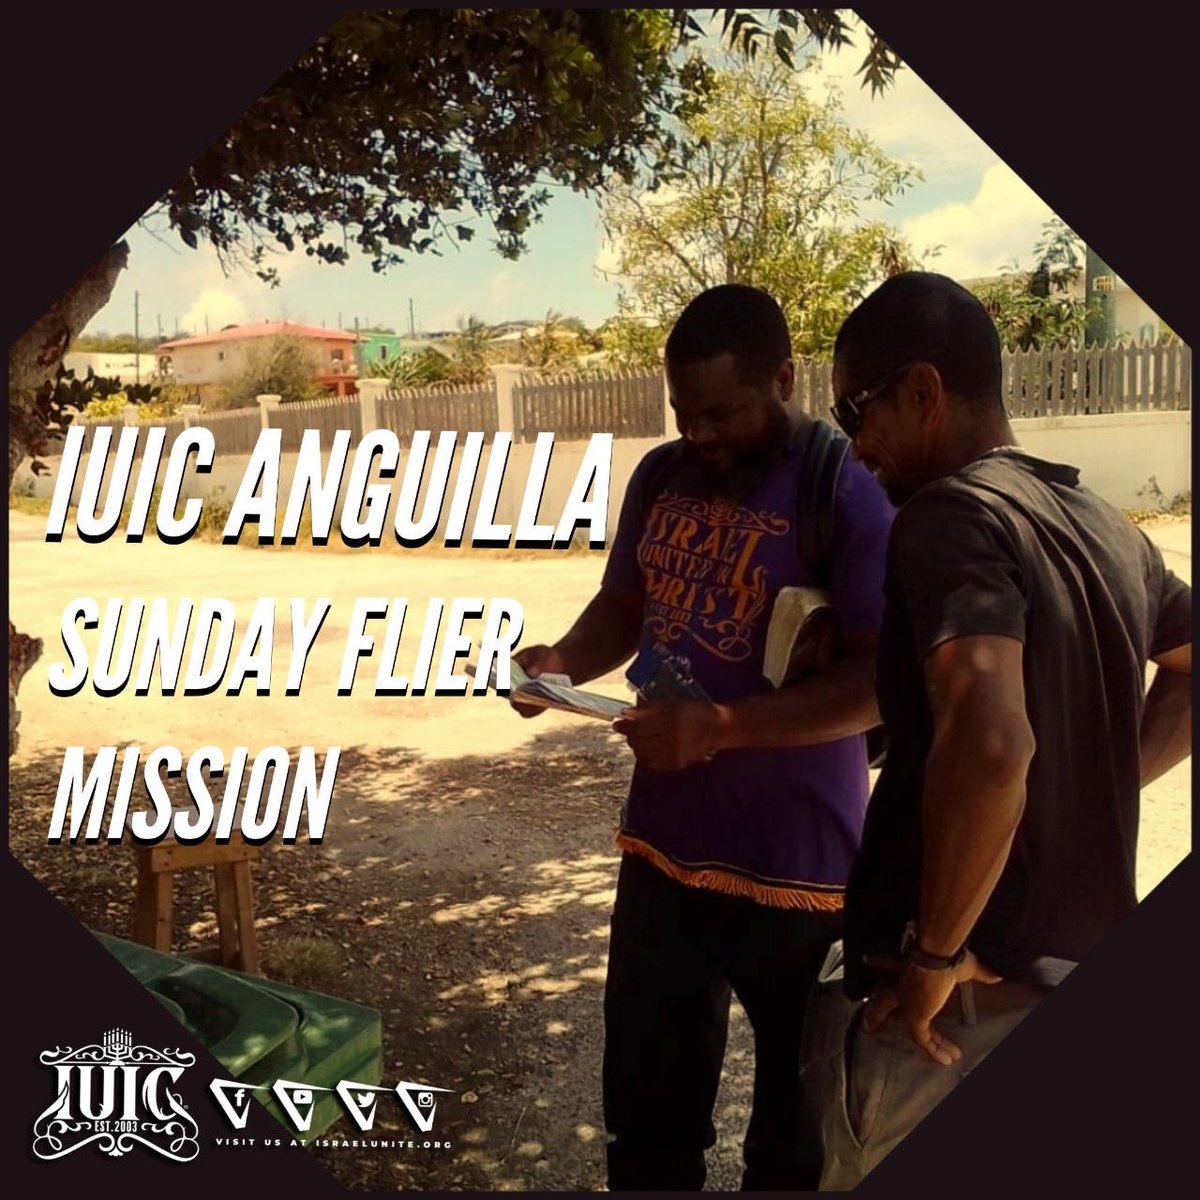 Iuic Anguilla Sunday Blitz
...........................………………
Visit our website here💻👨🏿‍💻🖥
🔴 solo.to/unitedinchrist

Contact us at 1-264-582-9130
 
#iuicanguilla #ProphetsOfGod #iuic  #TheProphetsAreBack 
#Israelites #Anguilla #264 #Sabbath #Thursday #FlyerMission 
#Blacks